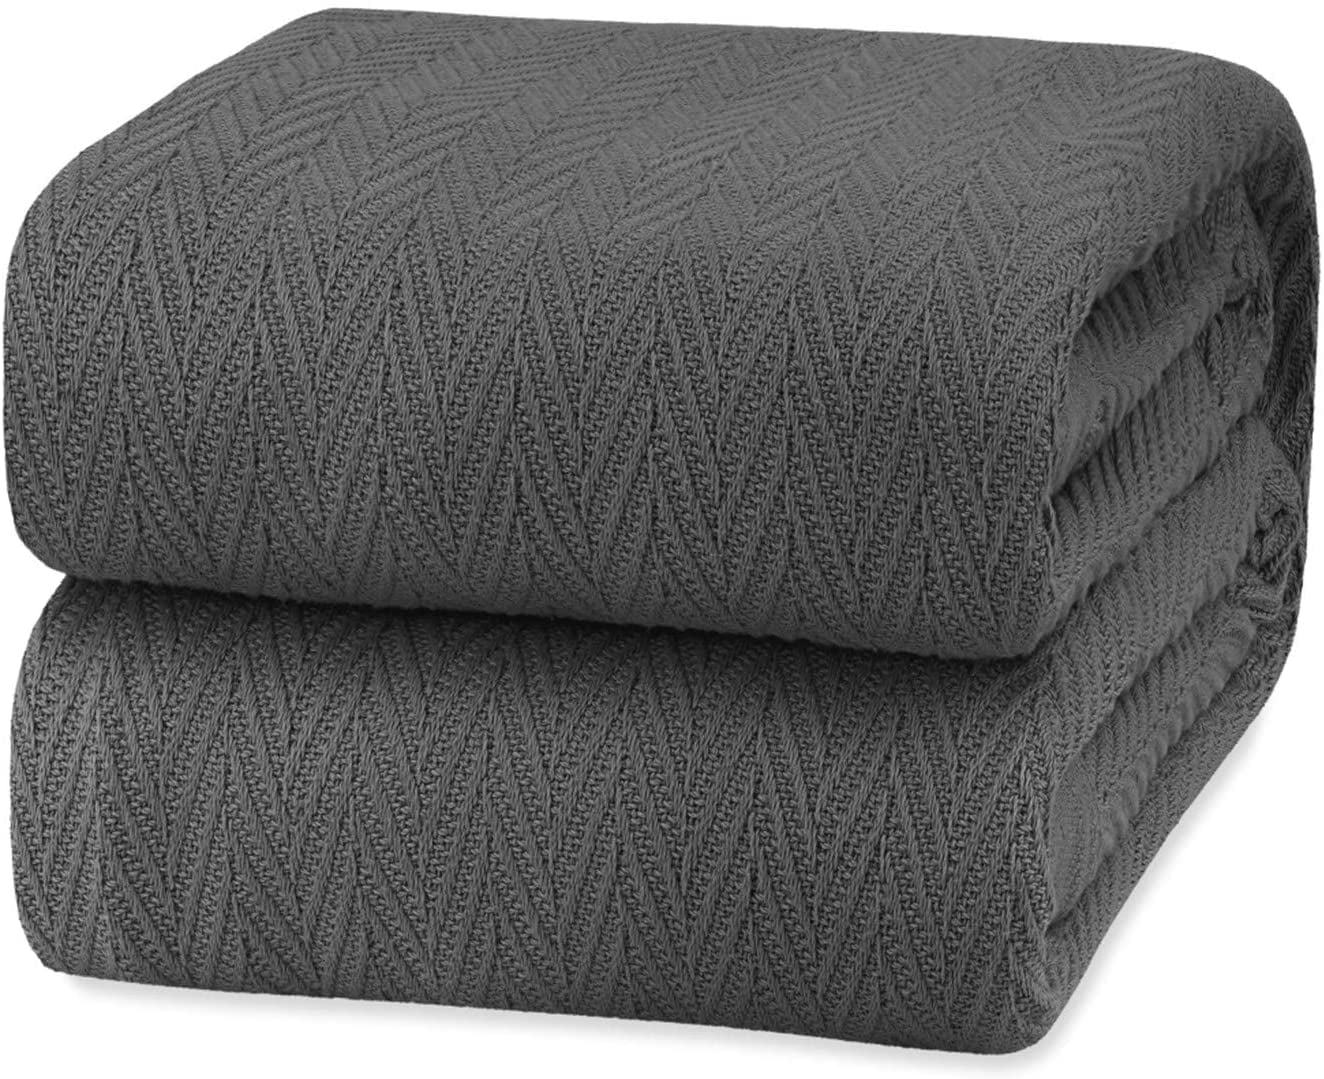 Luxury Thermal Cotton Blankets, Queen Size - Dark Grey - Walmart.com